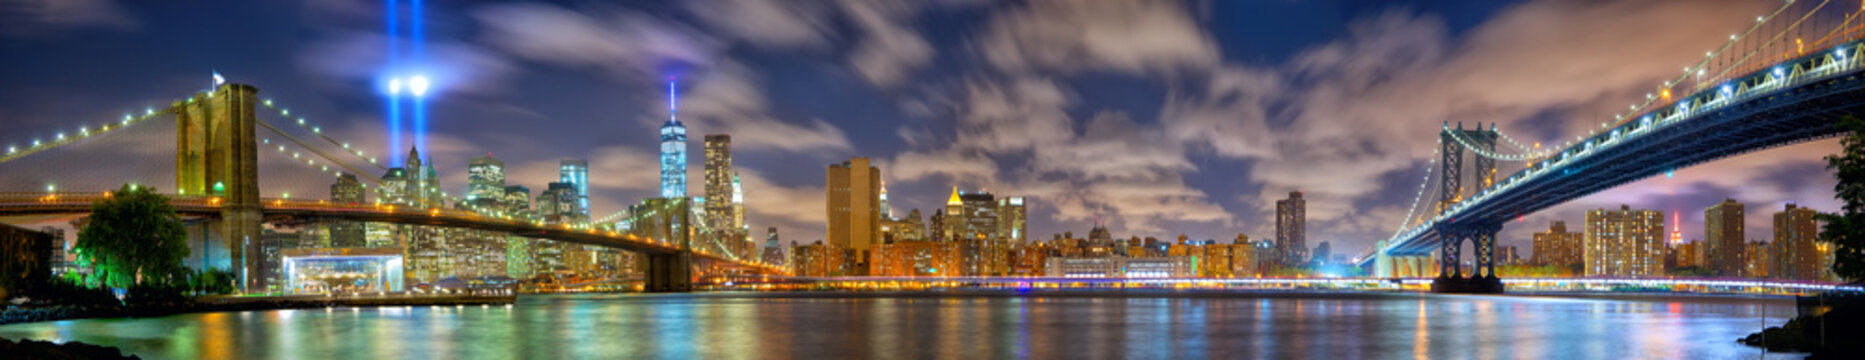 Fototapeta Panorama Manhattanu ku pamięci 11 września w Nowym Jorku